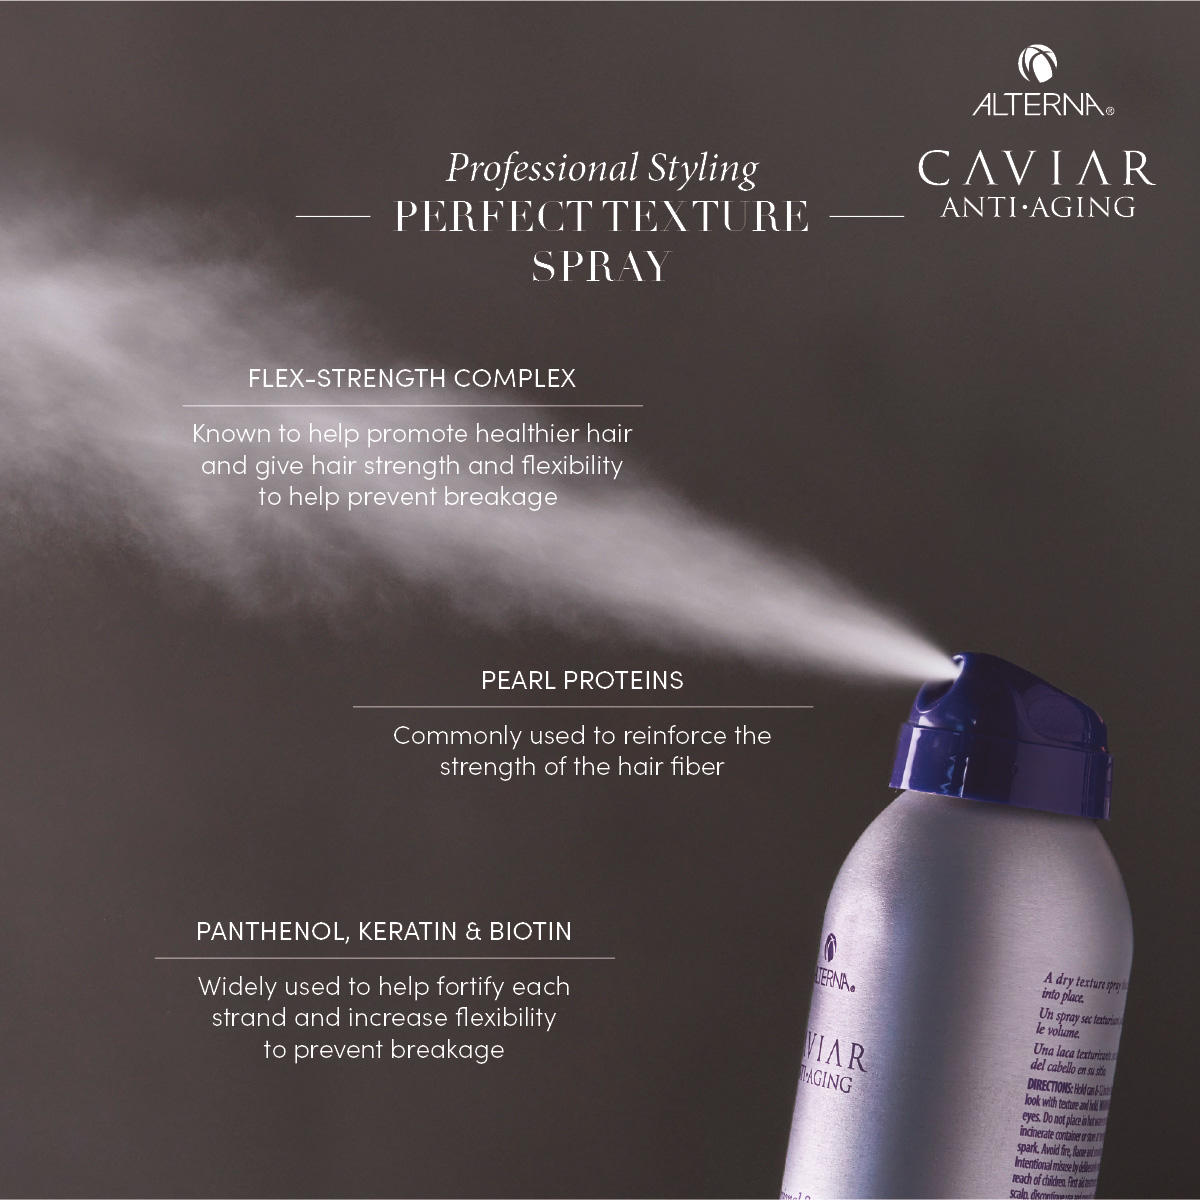 Alterna Caviar Anti-Aging Professional Styling Perfect Texture Spray 184 g - 4